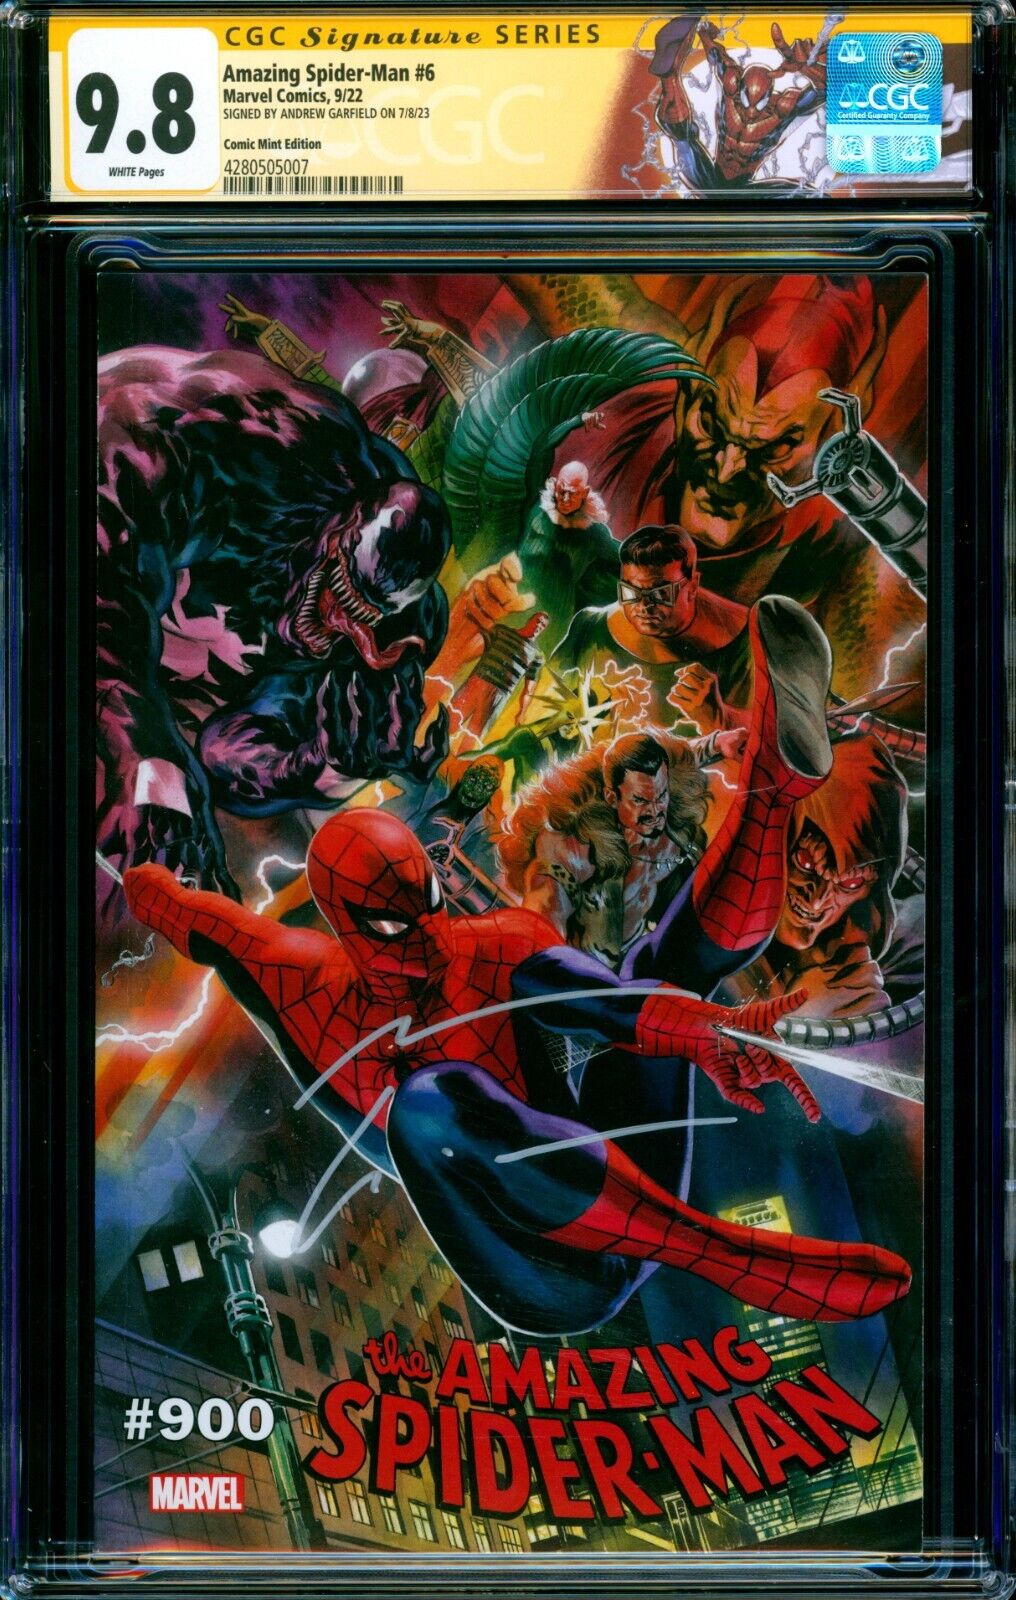 Amazing SpiderMan 6 VARIANT CGC SS 98 signed Andrew Garfield SPIDERMAN ACTOR